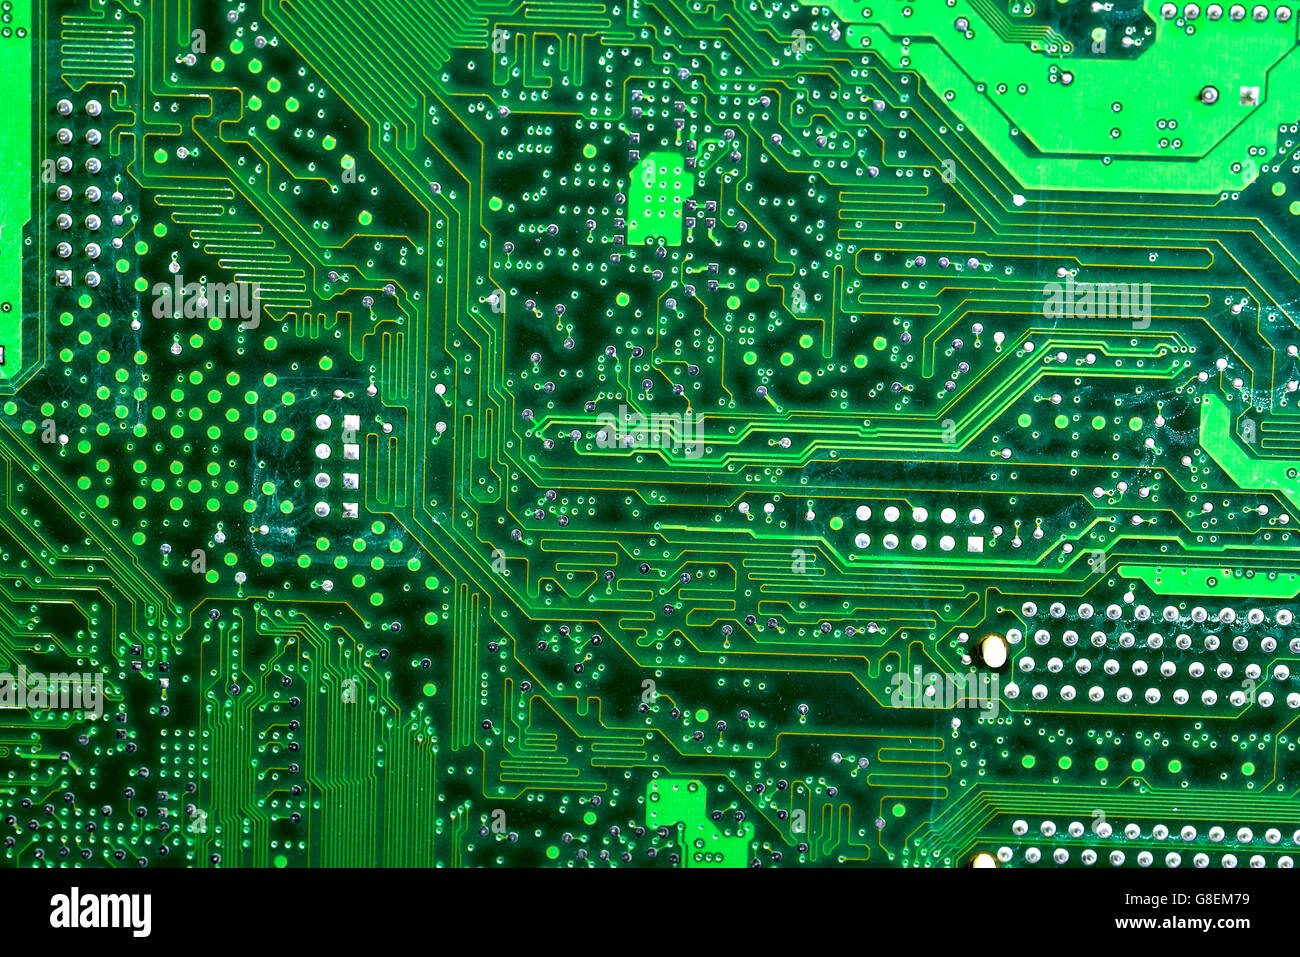 Printed circuit board conductor tracks close-up Stock Photo